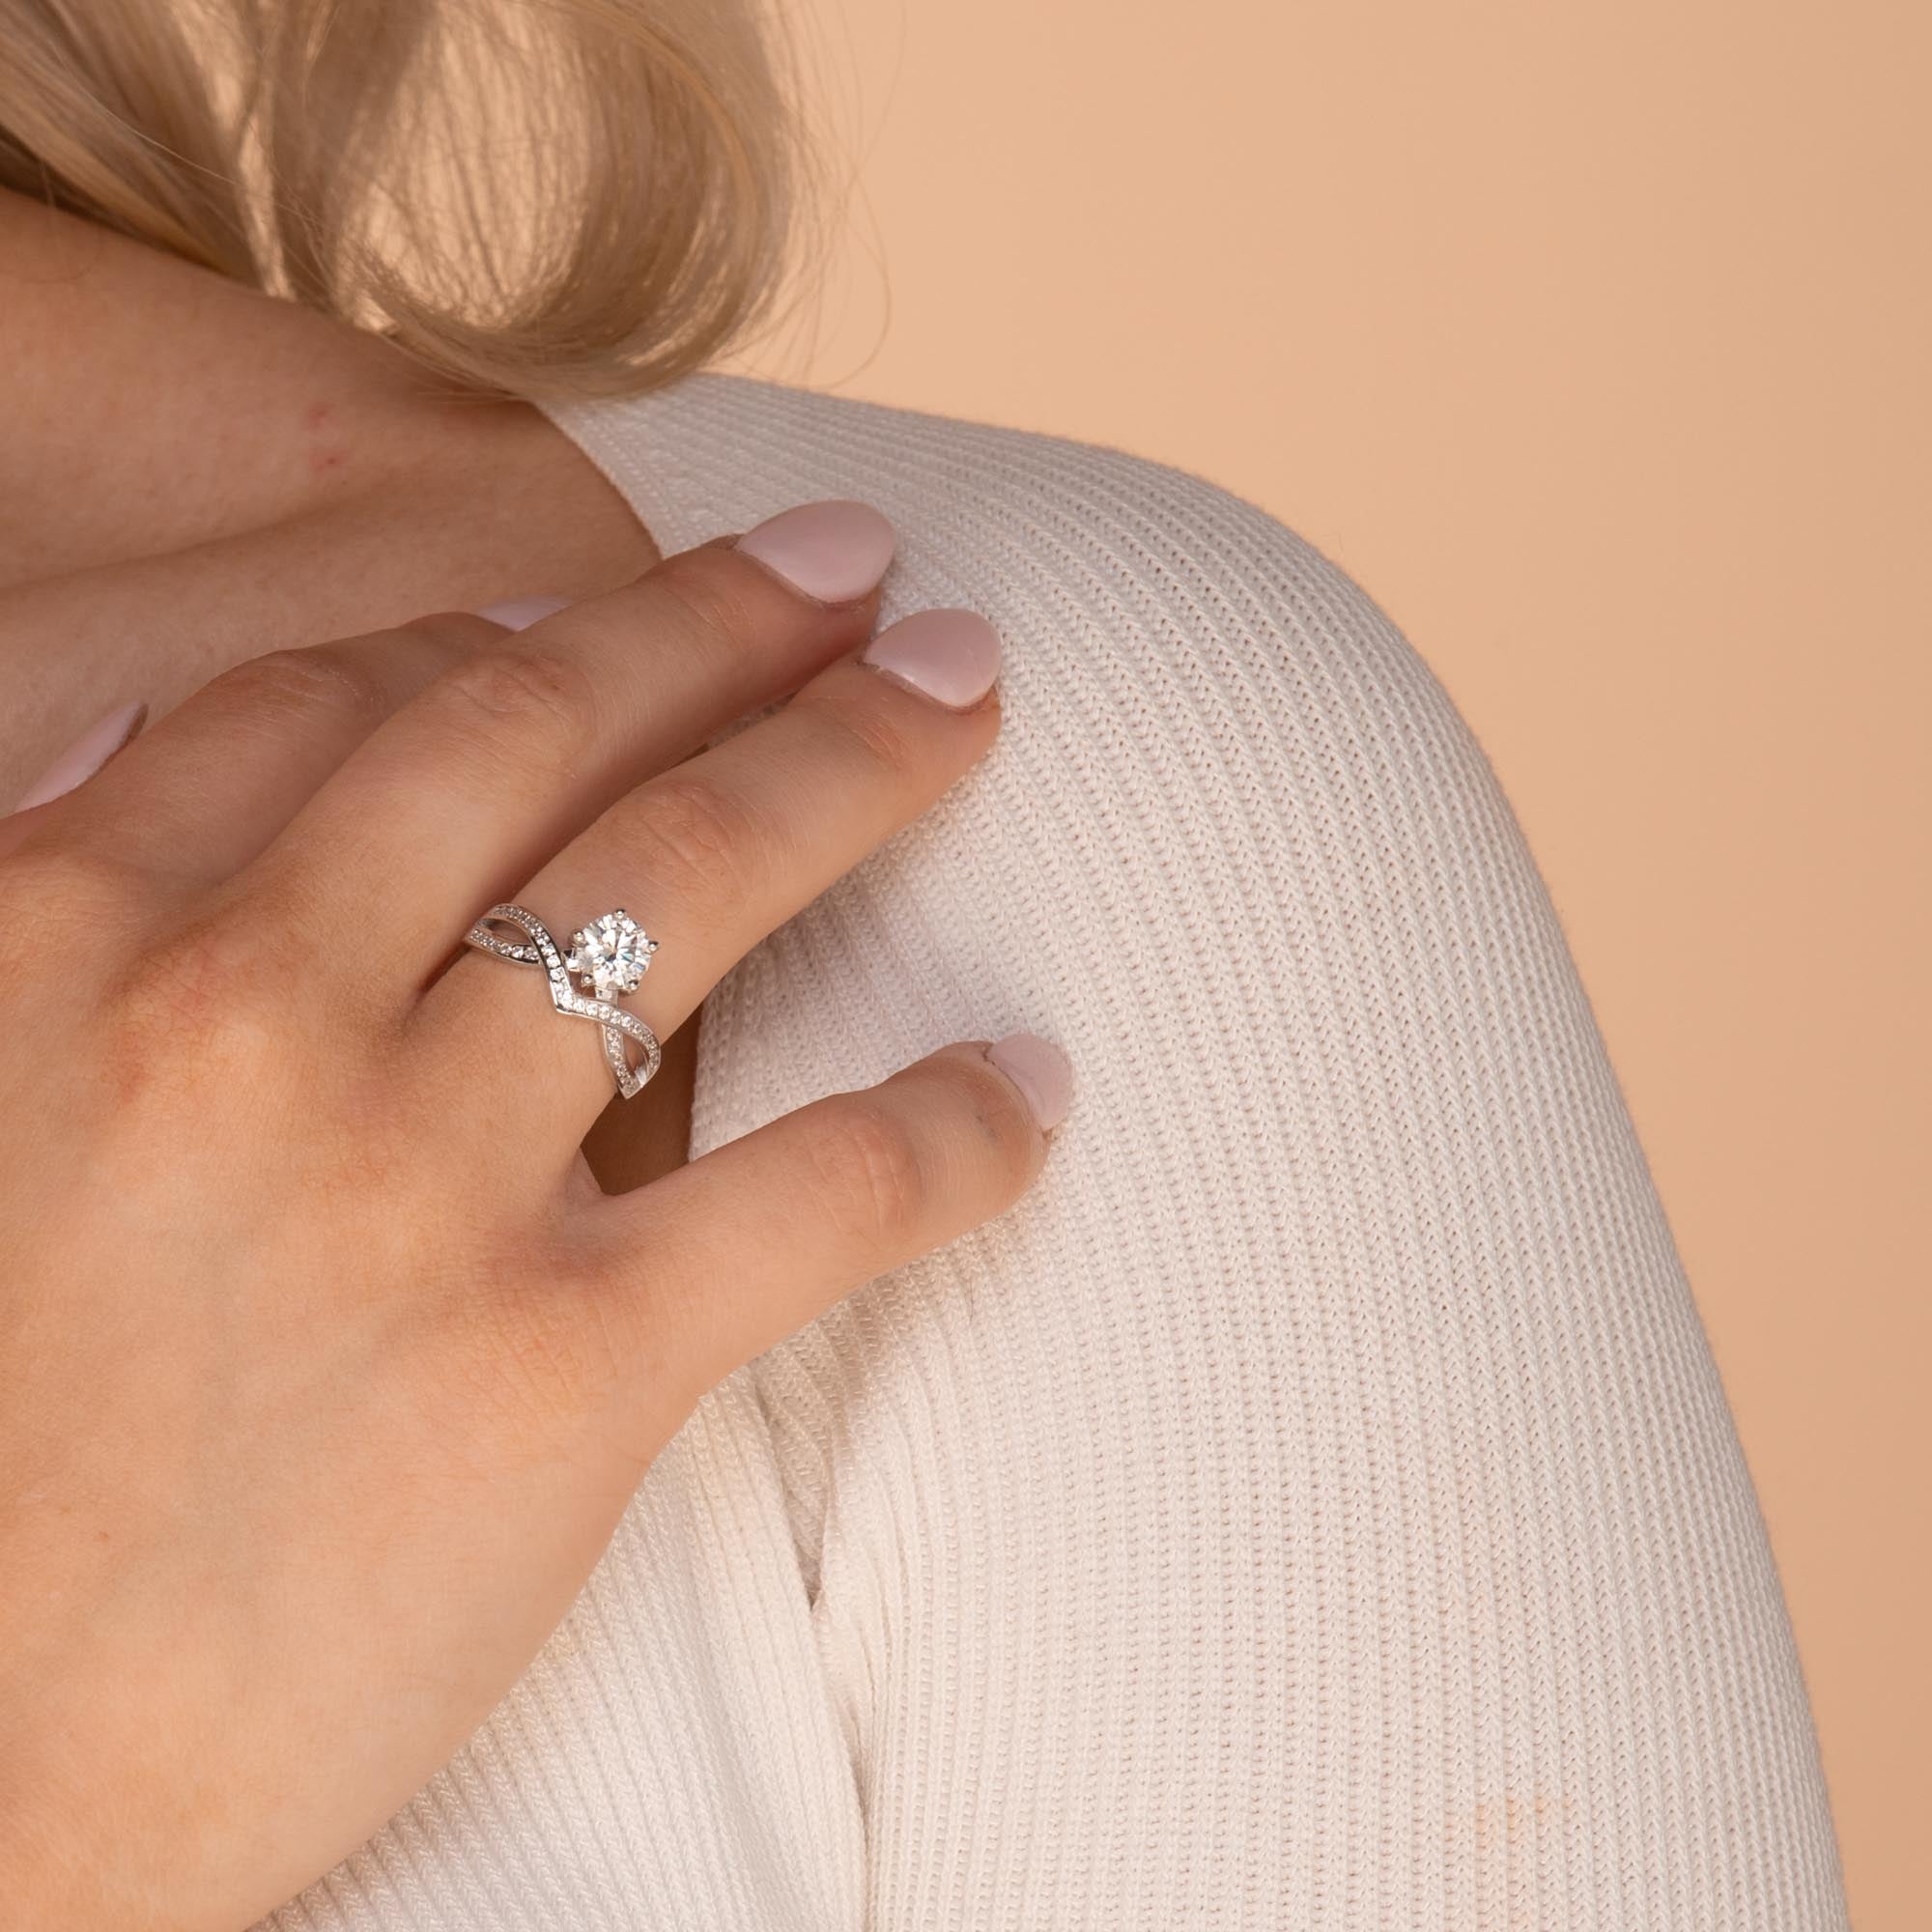 1 ct The Luna Moissanite Diamond Engagement Ring